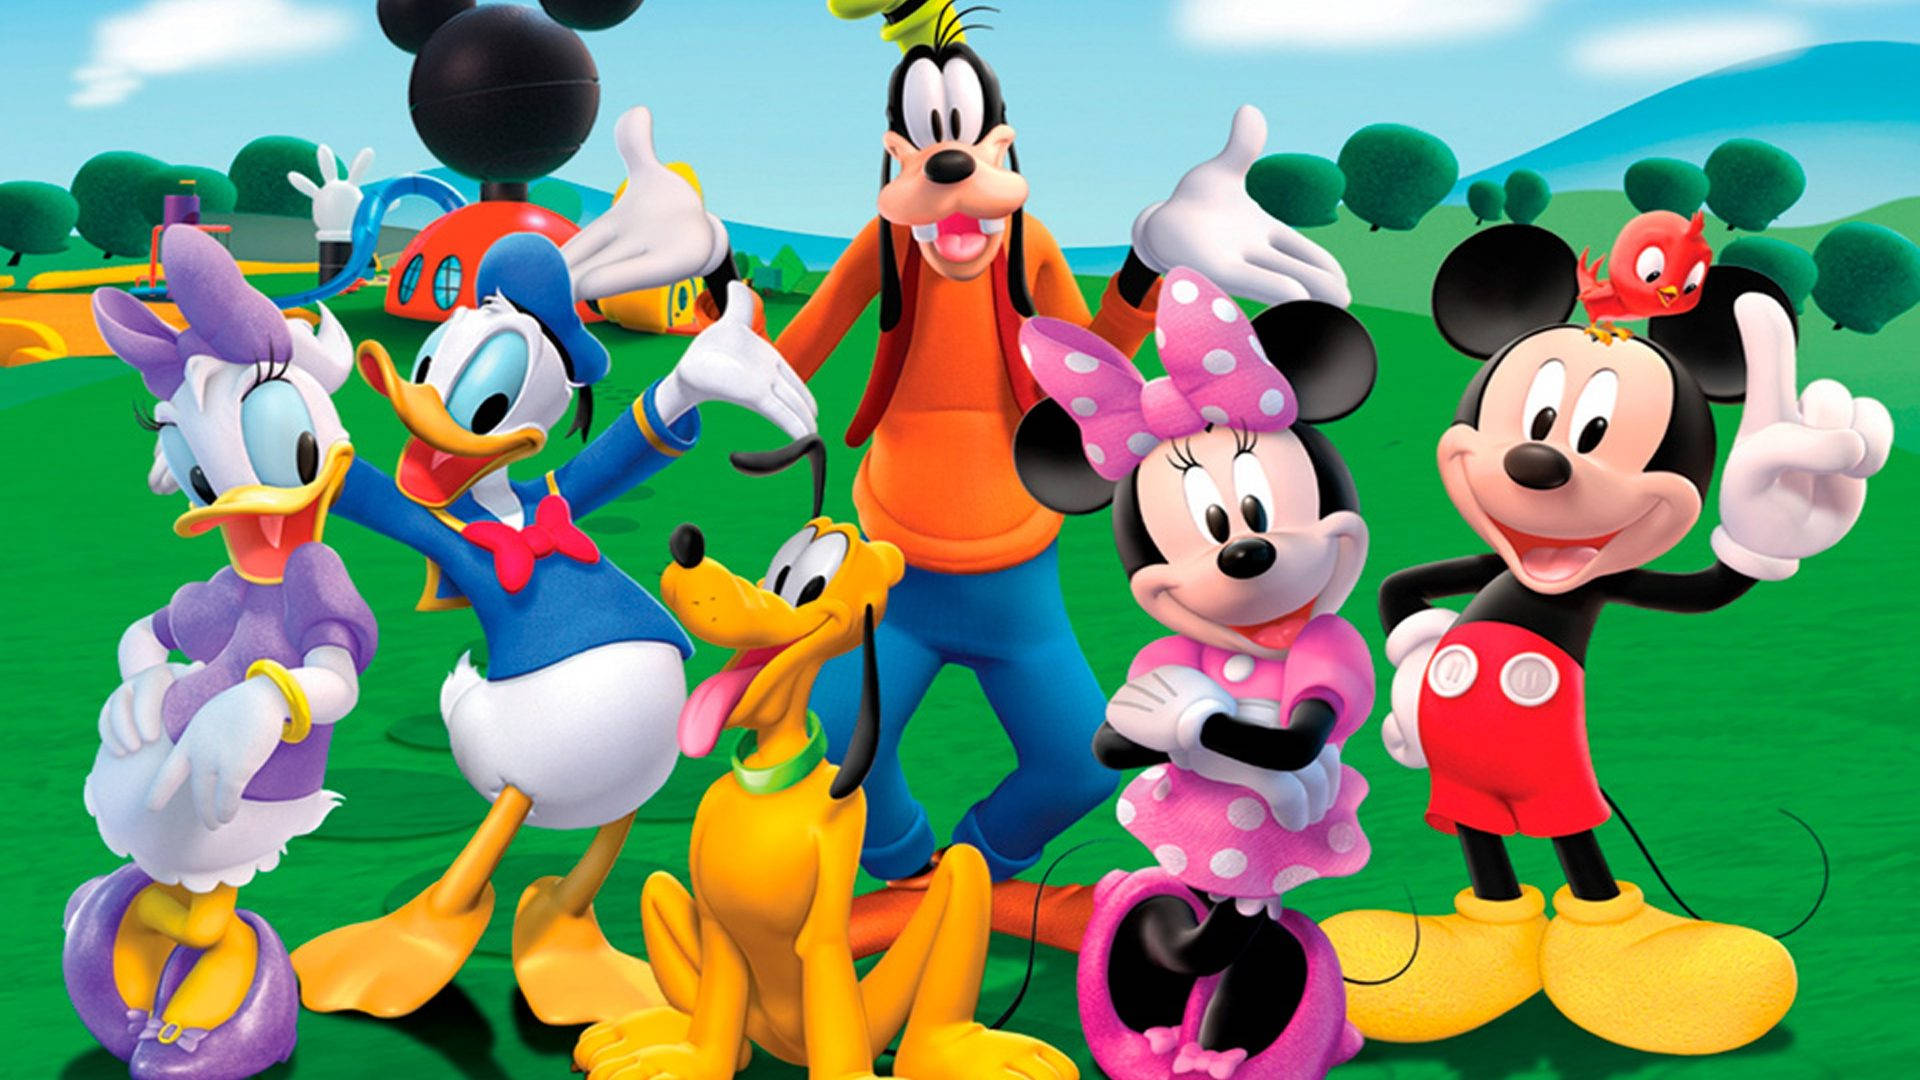 Pluto Disney Wallpaper